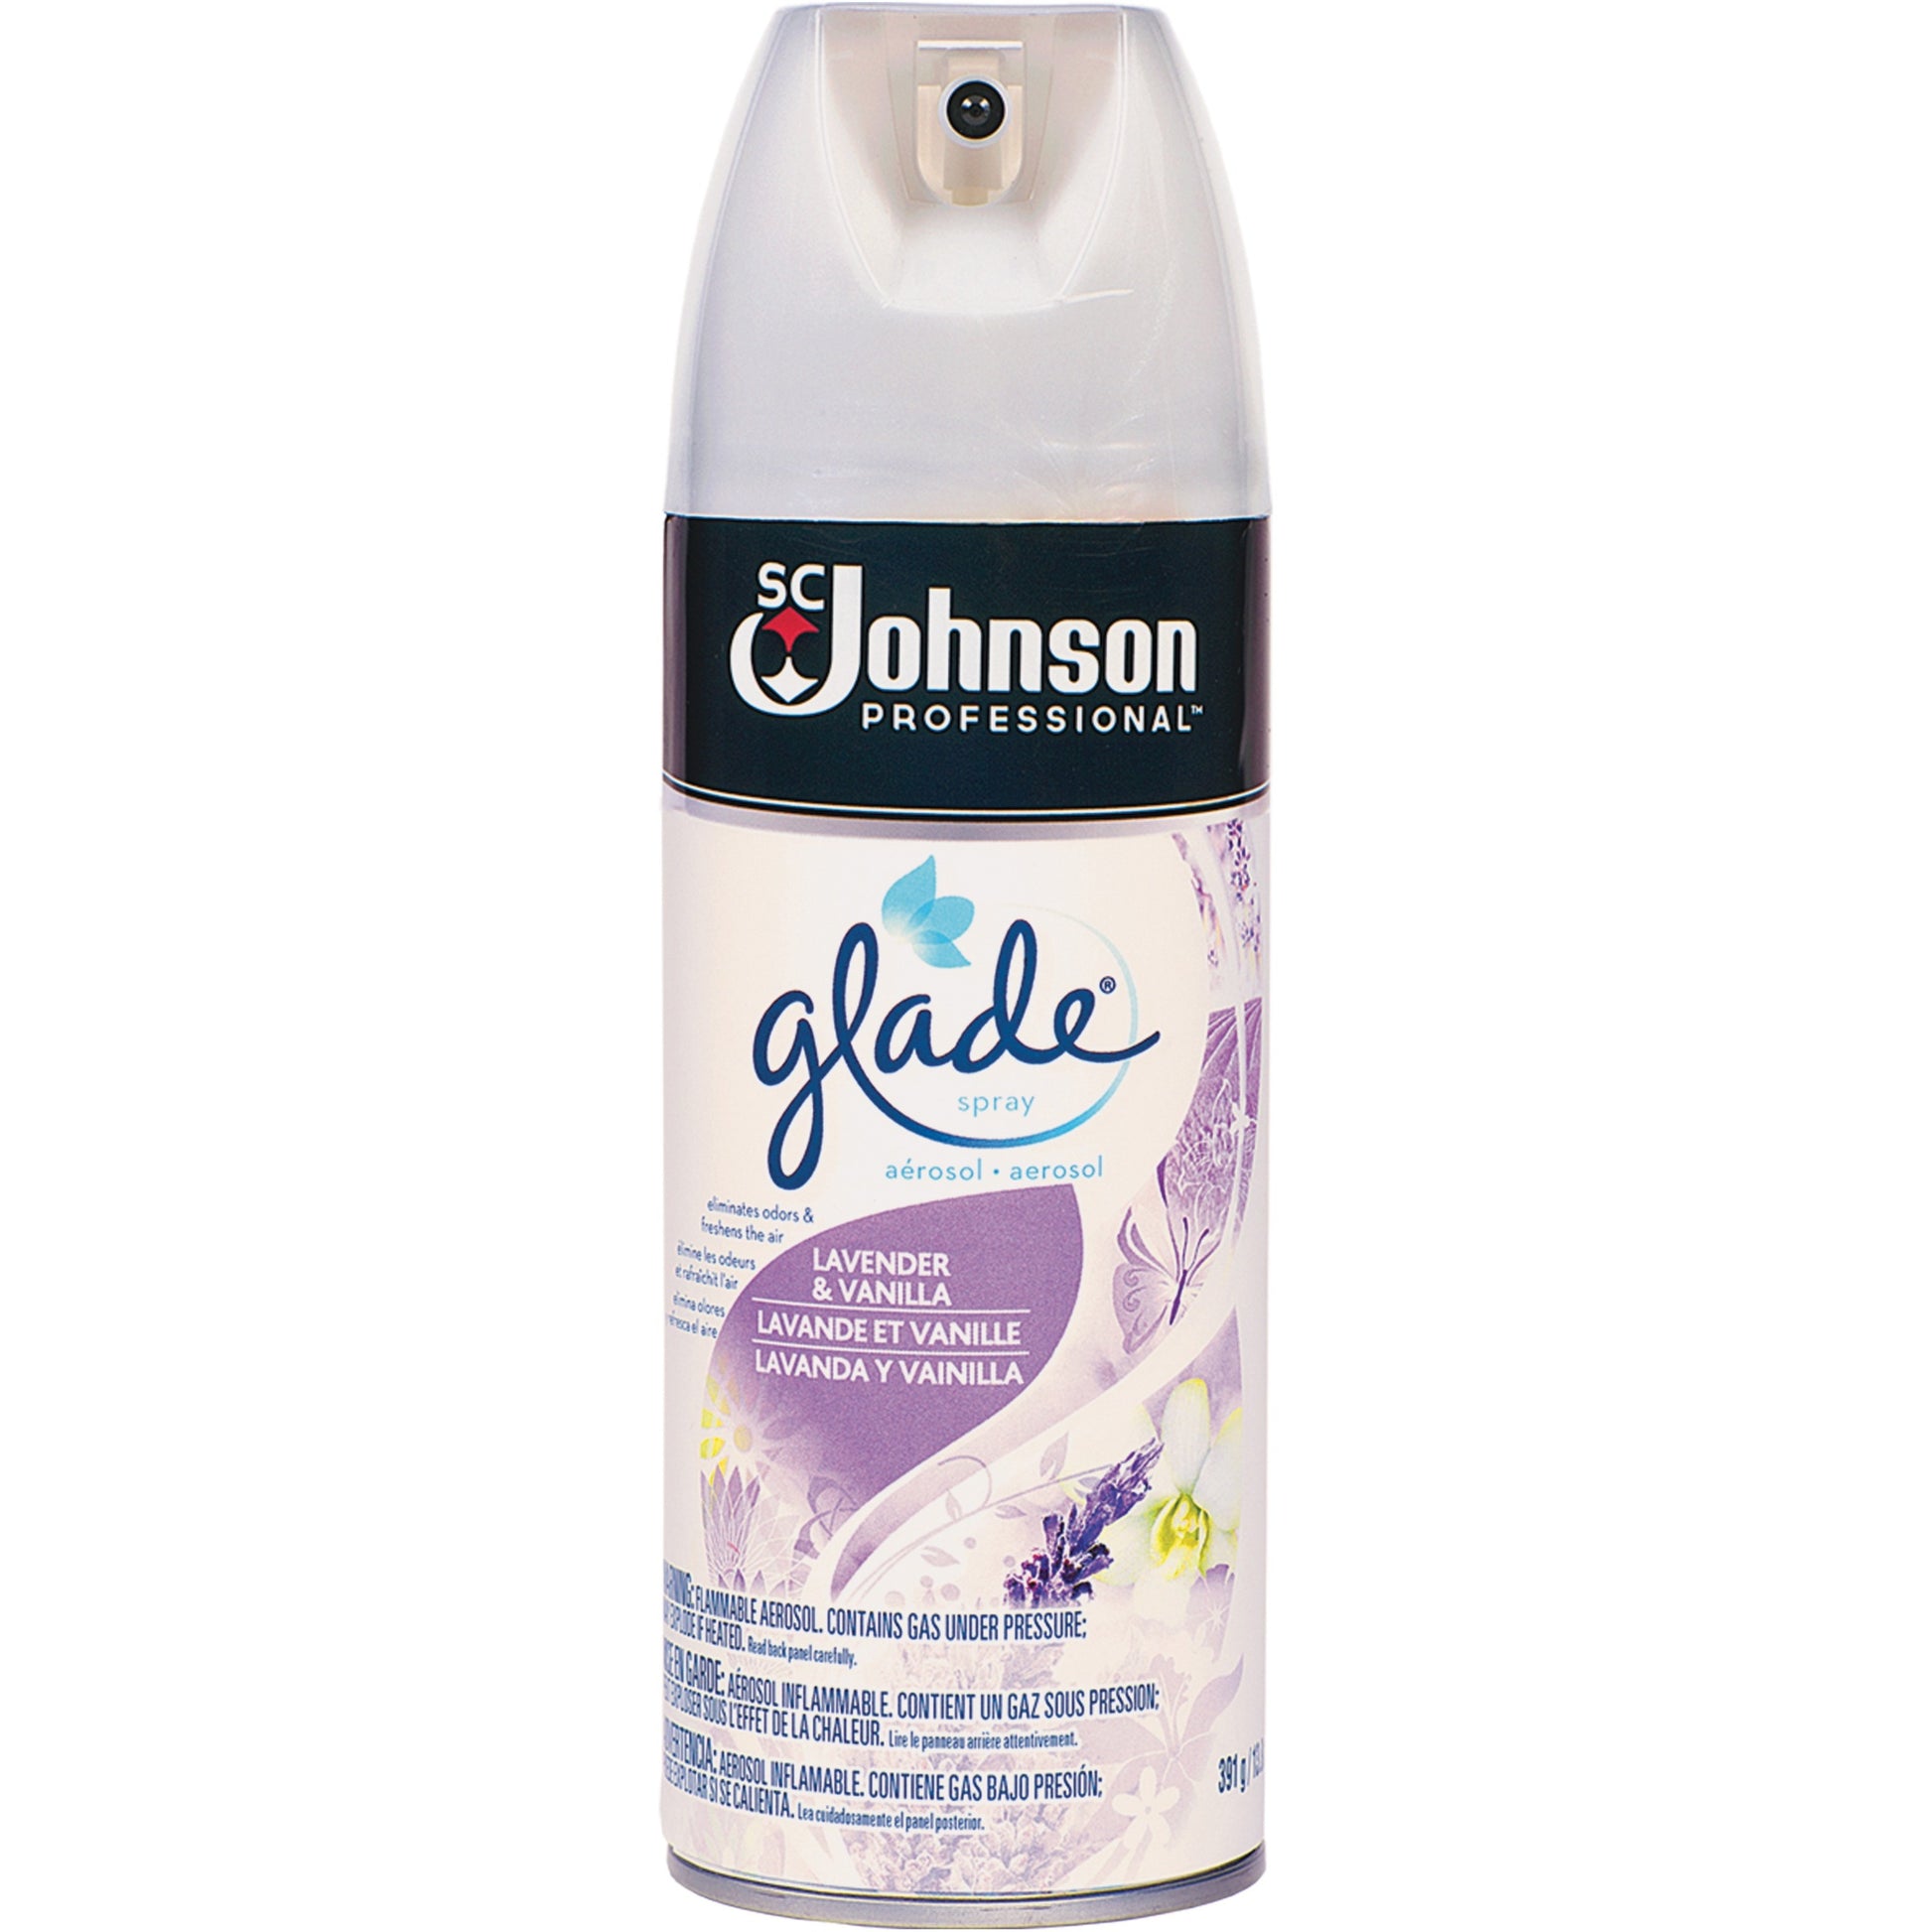 Glade Scented Air Freshener Spray